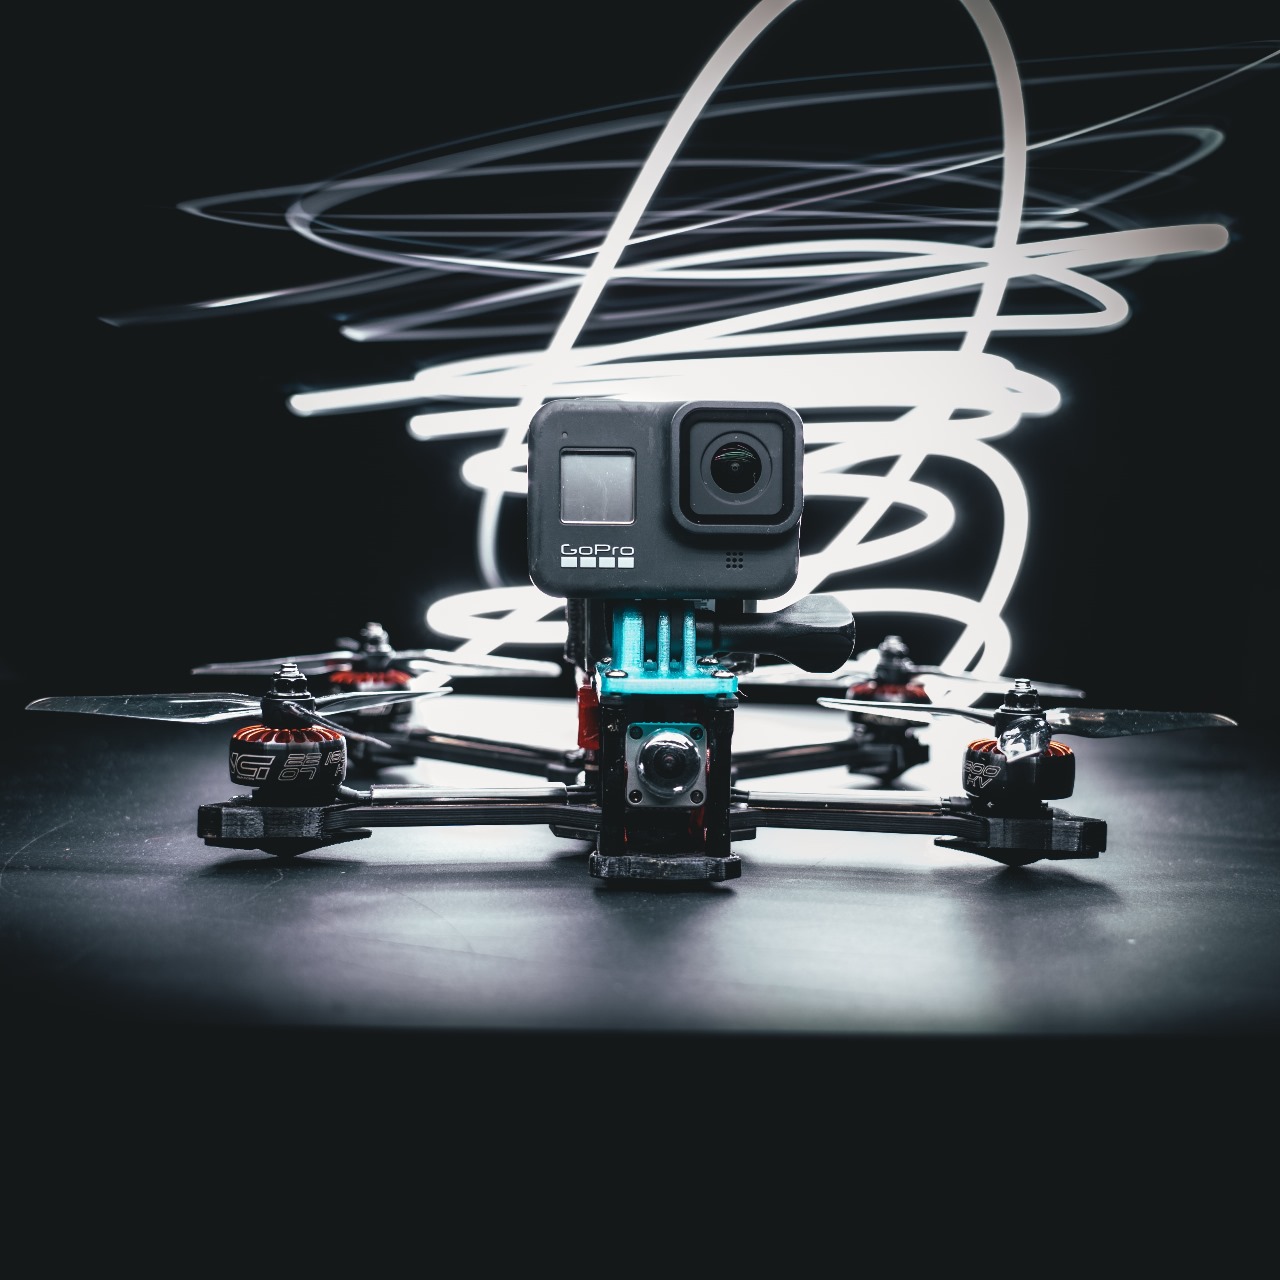 zephyr drone course